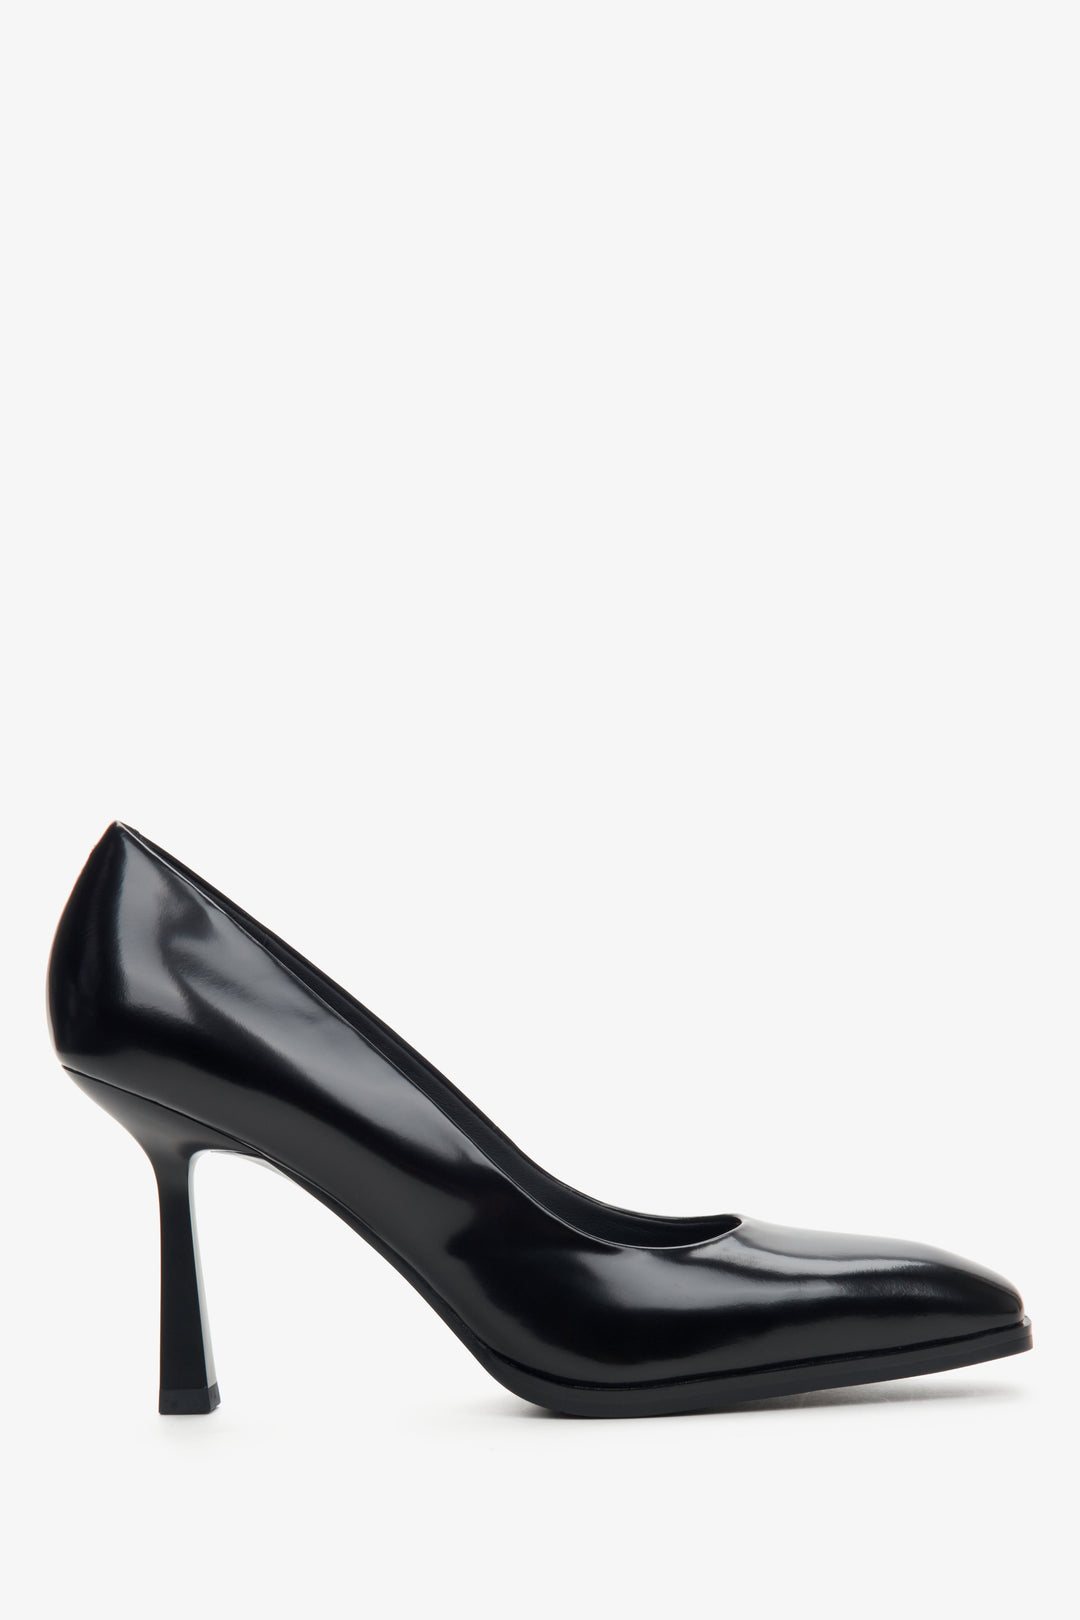 Women's Black High Heels Shoes made of Genuine Leather Estro ER00114176.